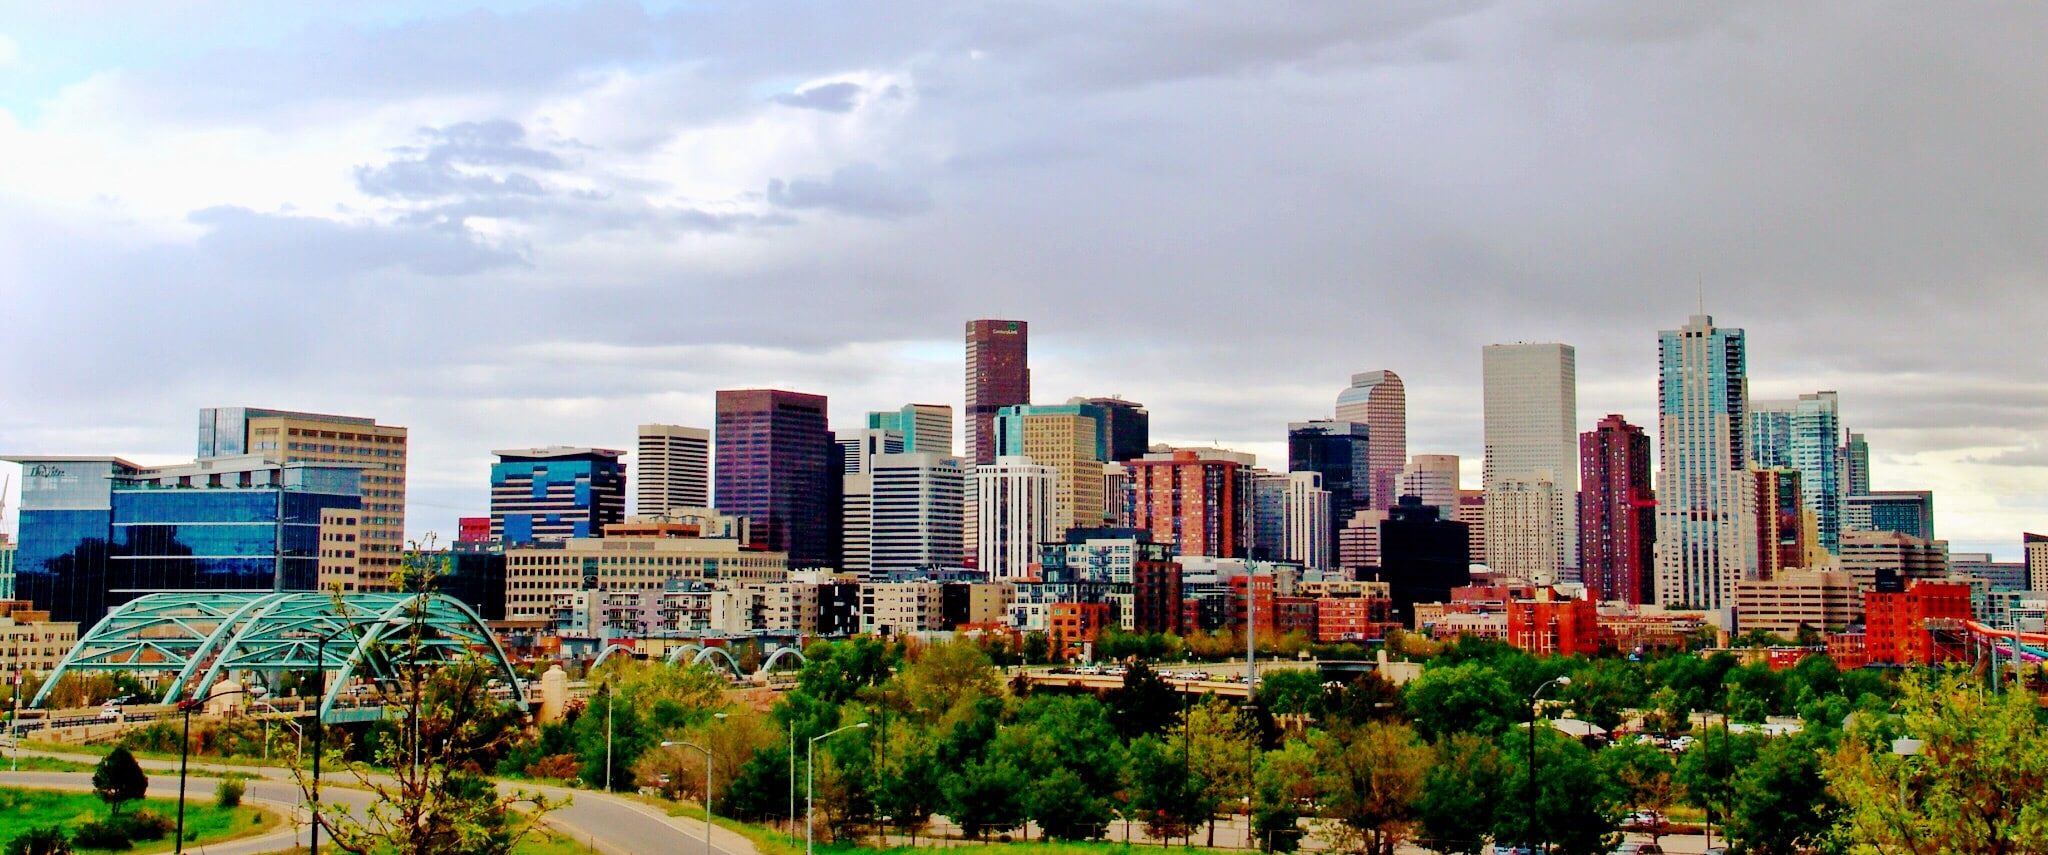 Denver Housing Market Update - March 2021